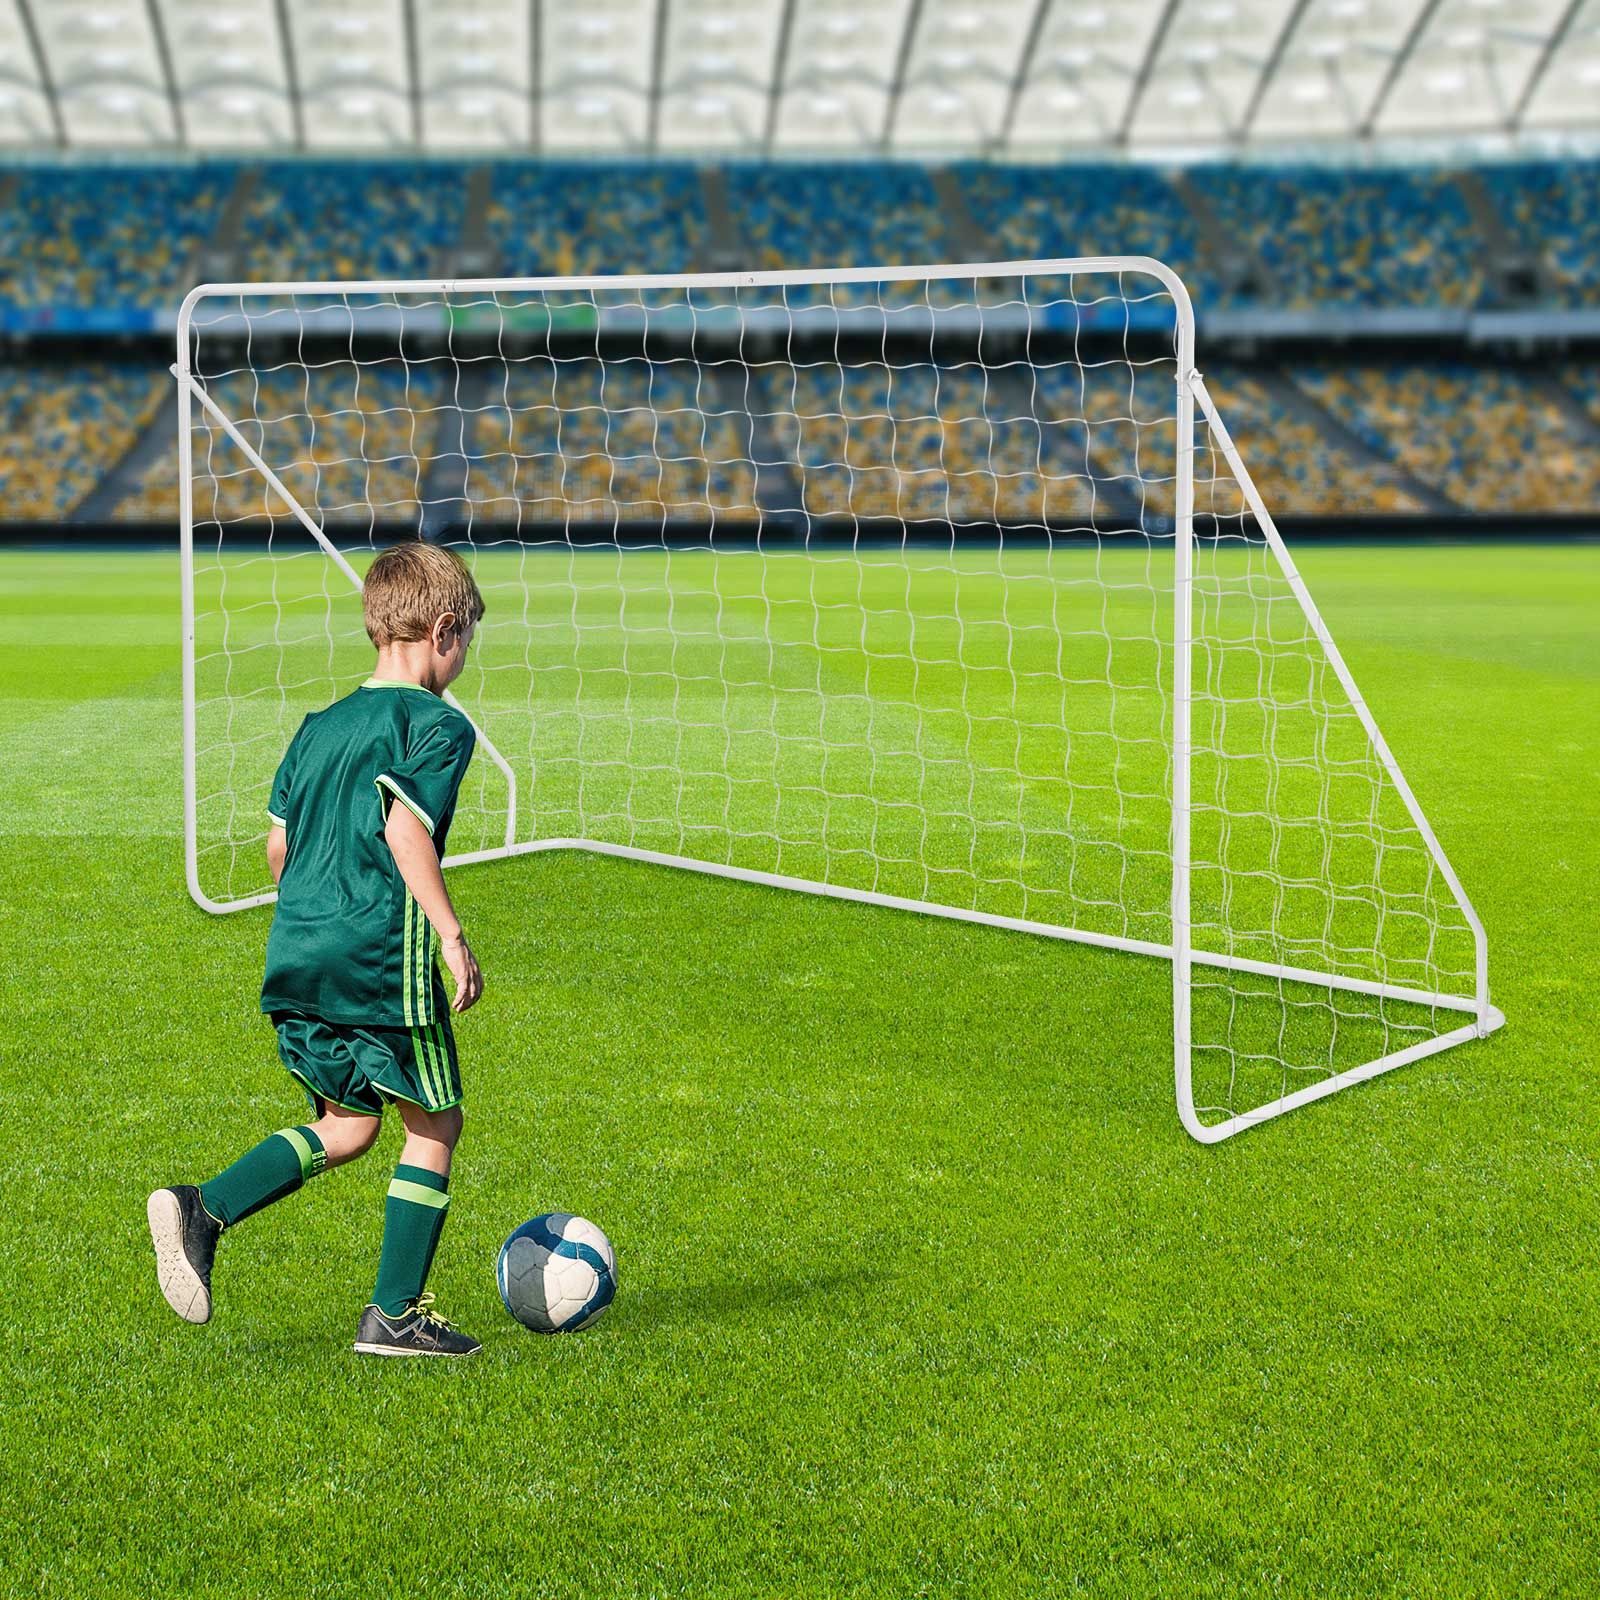 Soccer Goal Set Football Net Metal Frame Backyard Training Practice Kids Adults Youth Home Outdoor Sports Games Match 2.4x1.52m